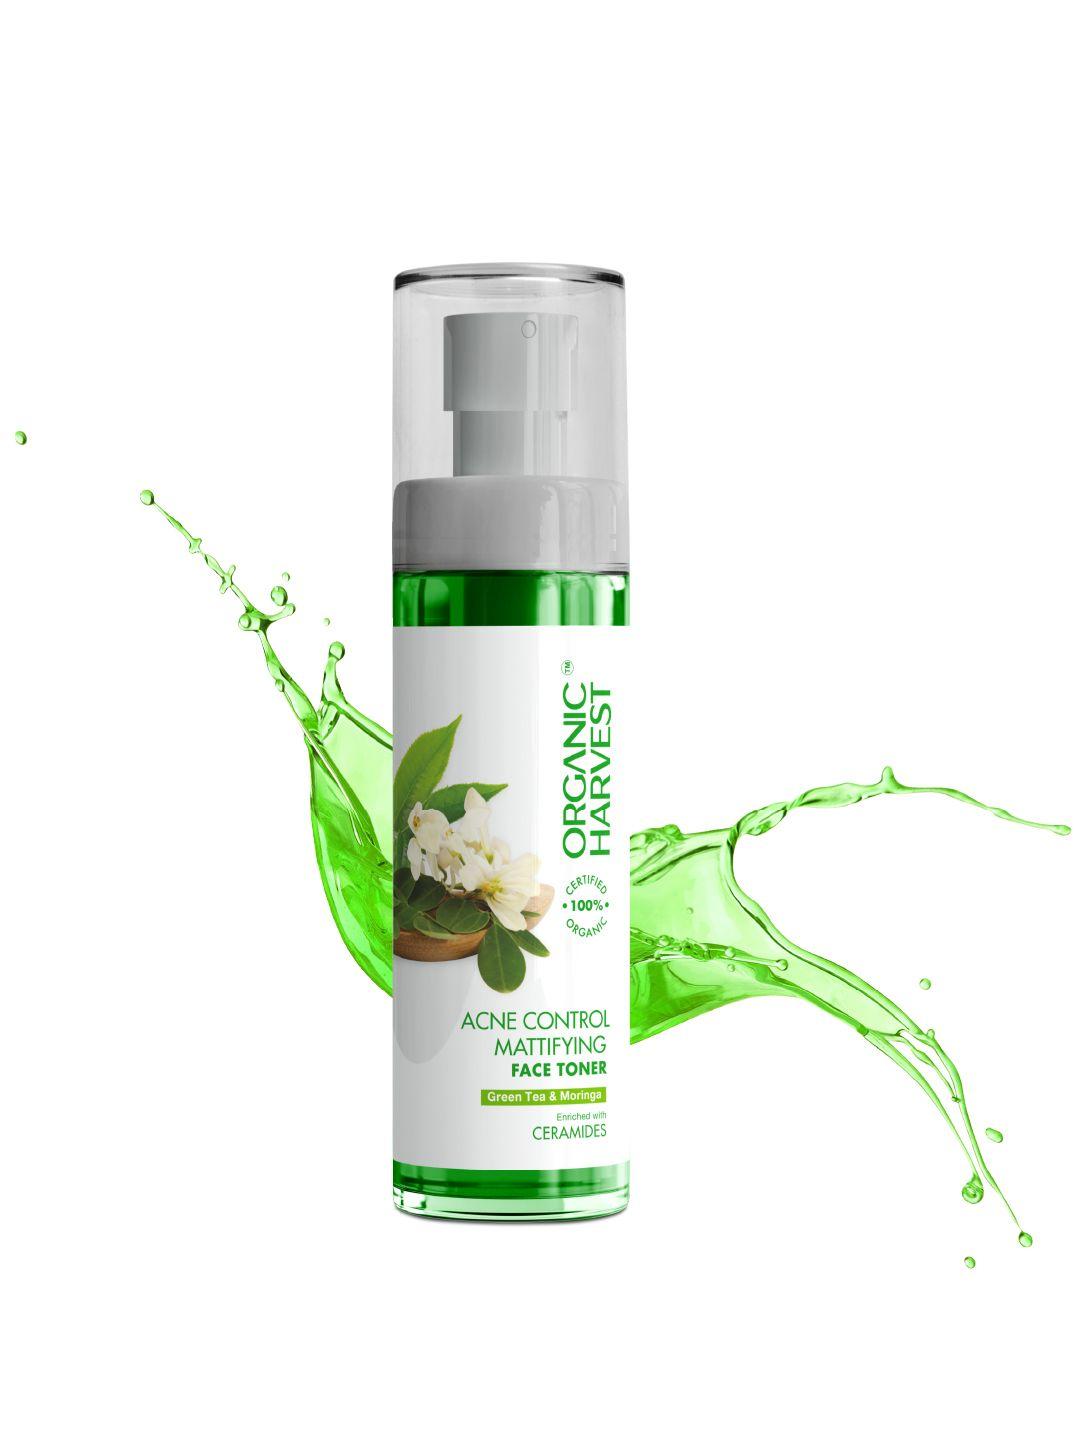 organic harvest acne control mattifying face toner with green tea & moringa extracts